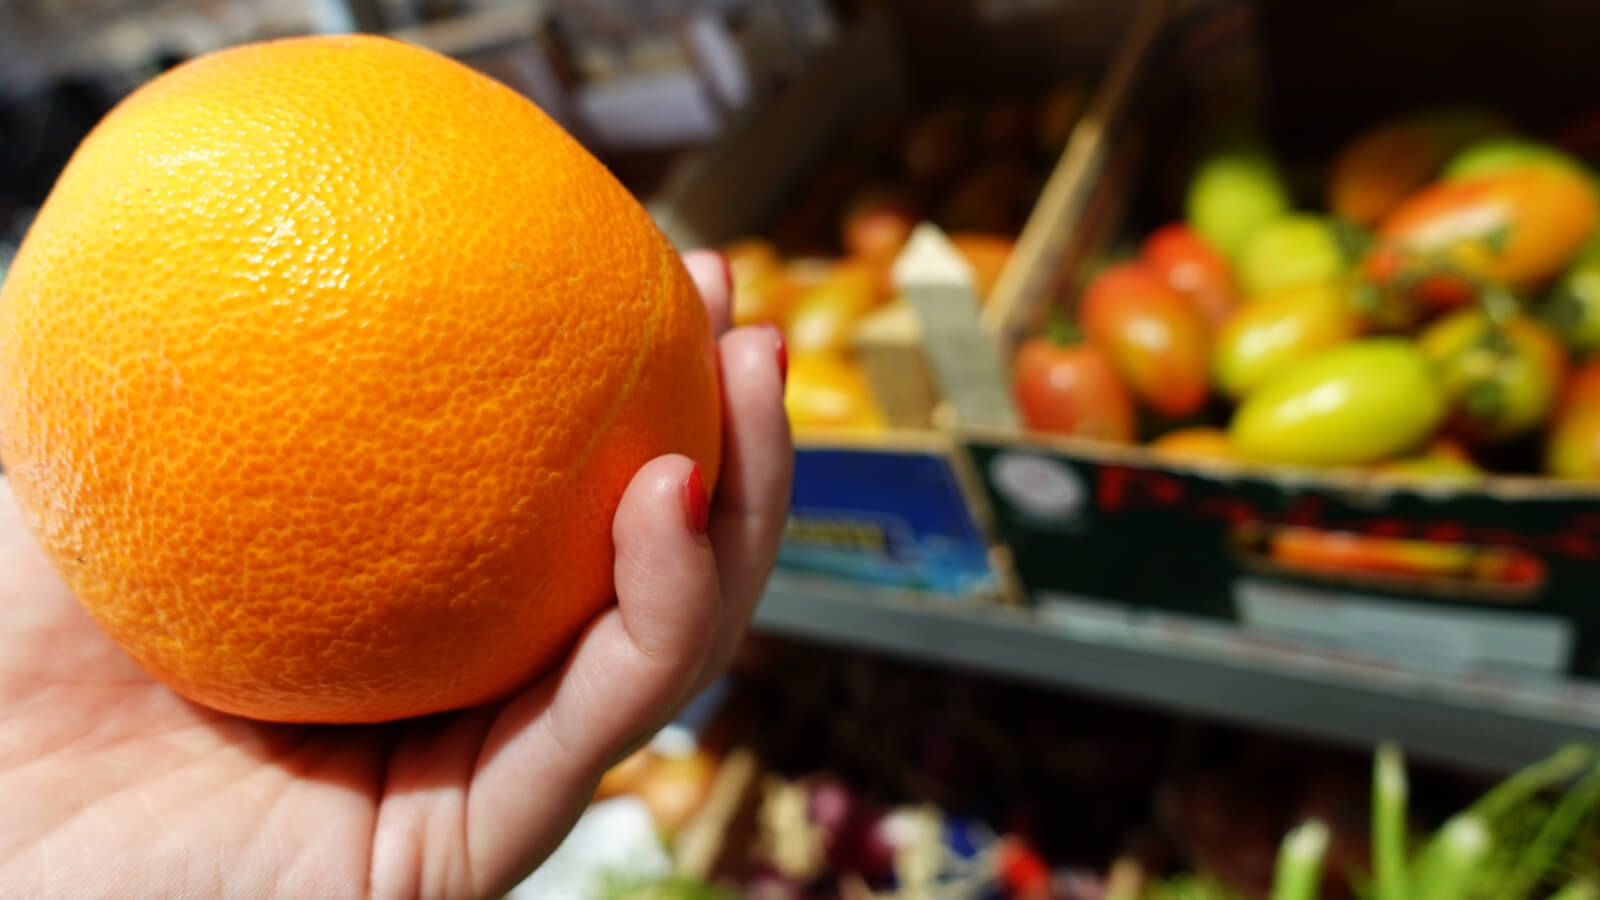 A hand holding an orange